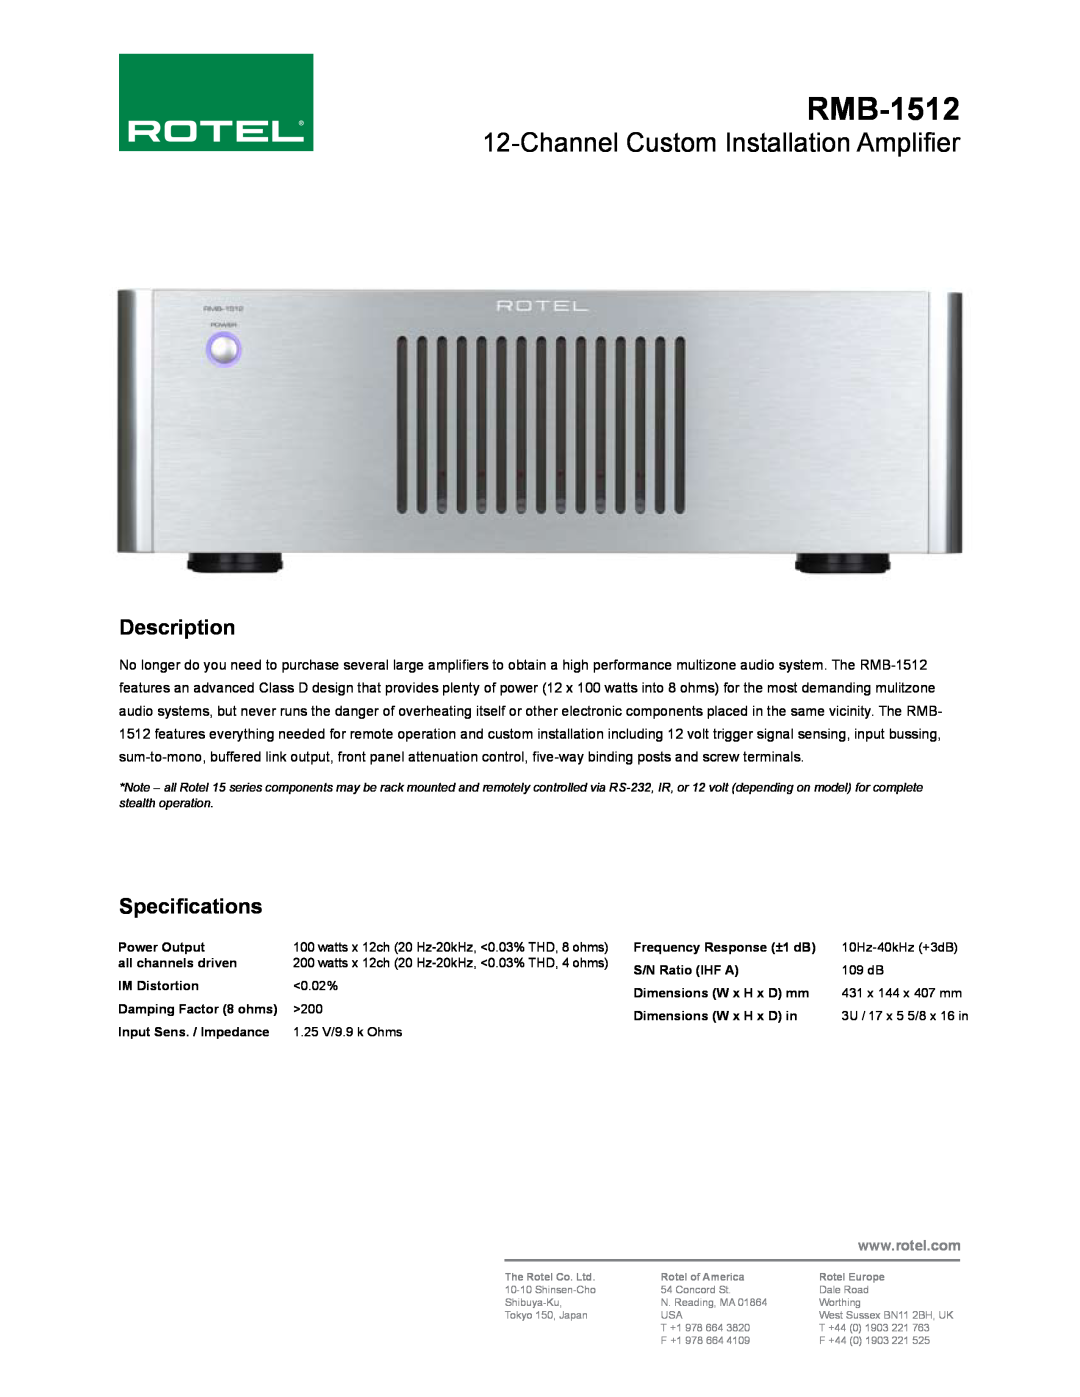 Rotel RMB-1512 dimensions ChannelCustom Installation Amplifier, Description, Specifications 